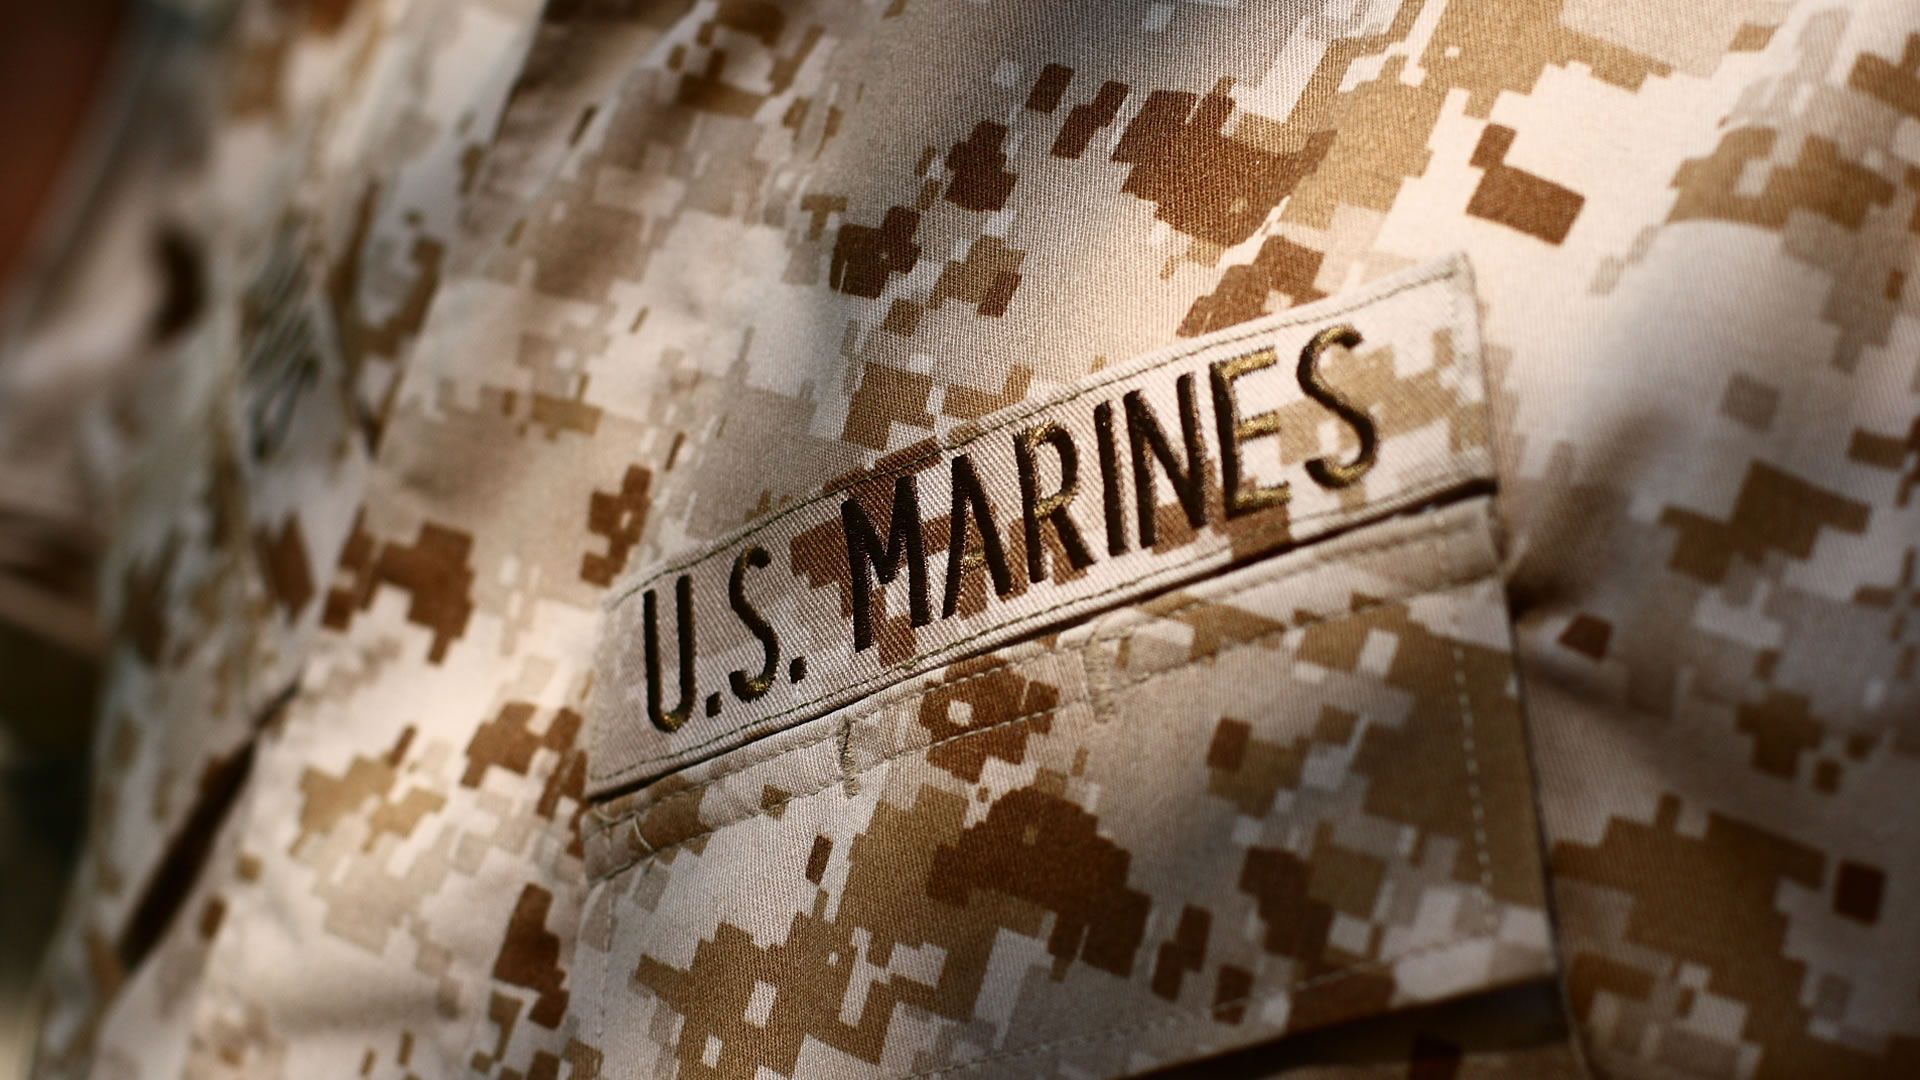 US Marines Uniform Patch (2306)